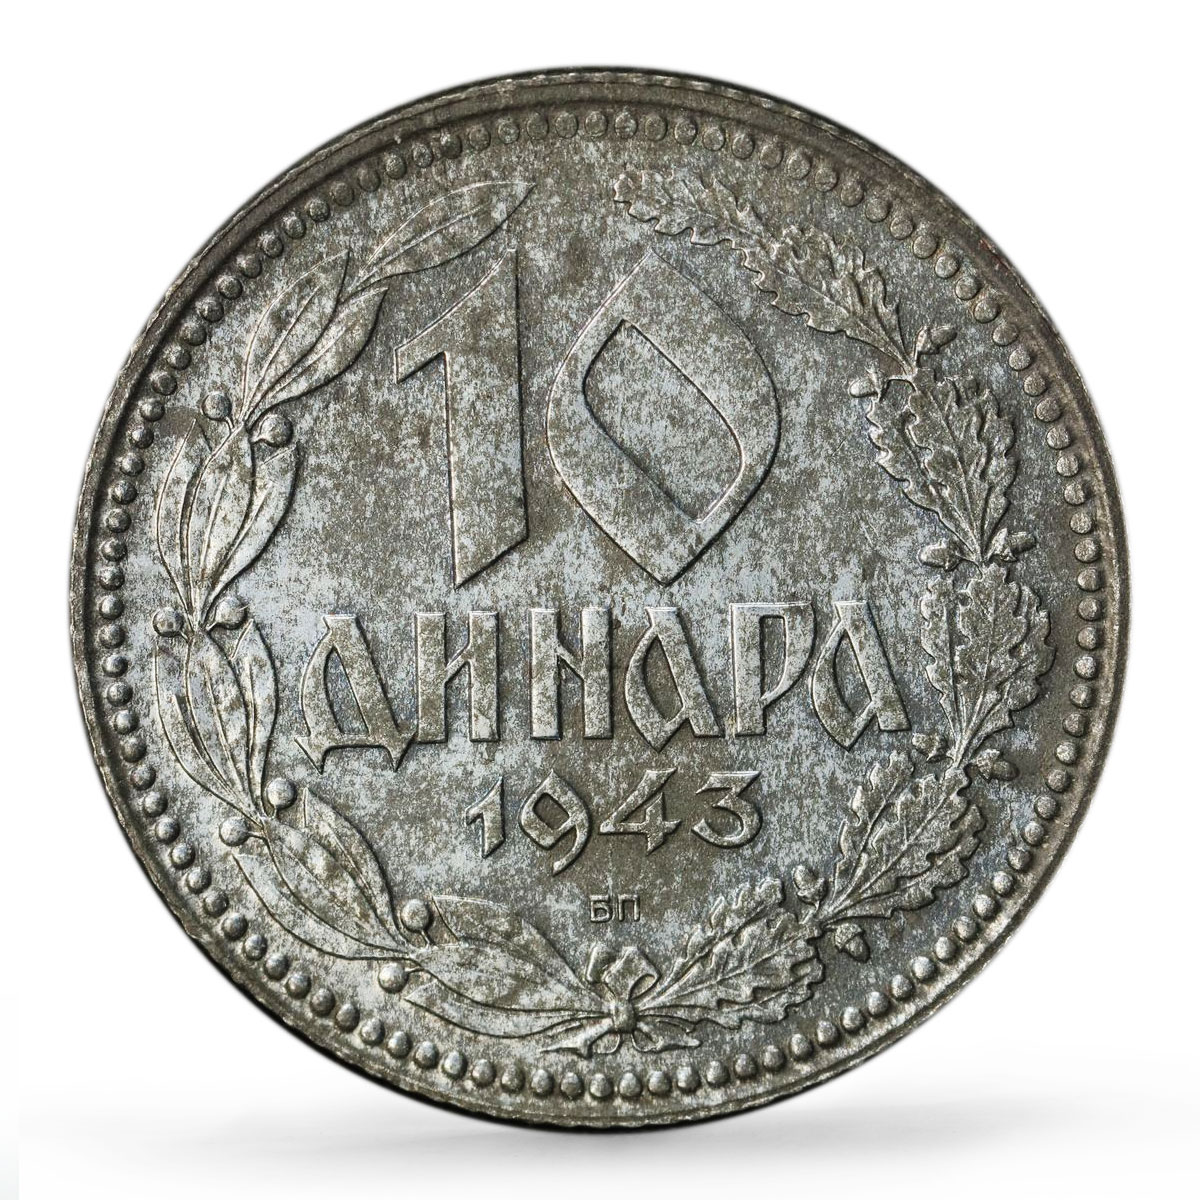 Serbia 10 dinara Regular Coinage German Occupation KM-33 MS62 PCGS coin 1943